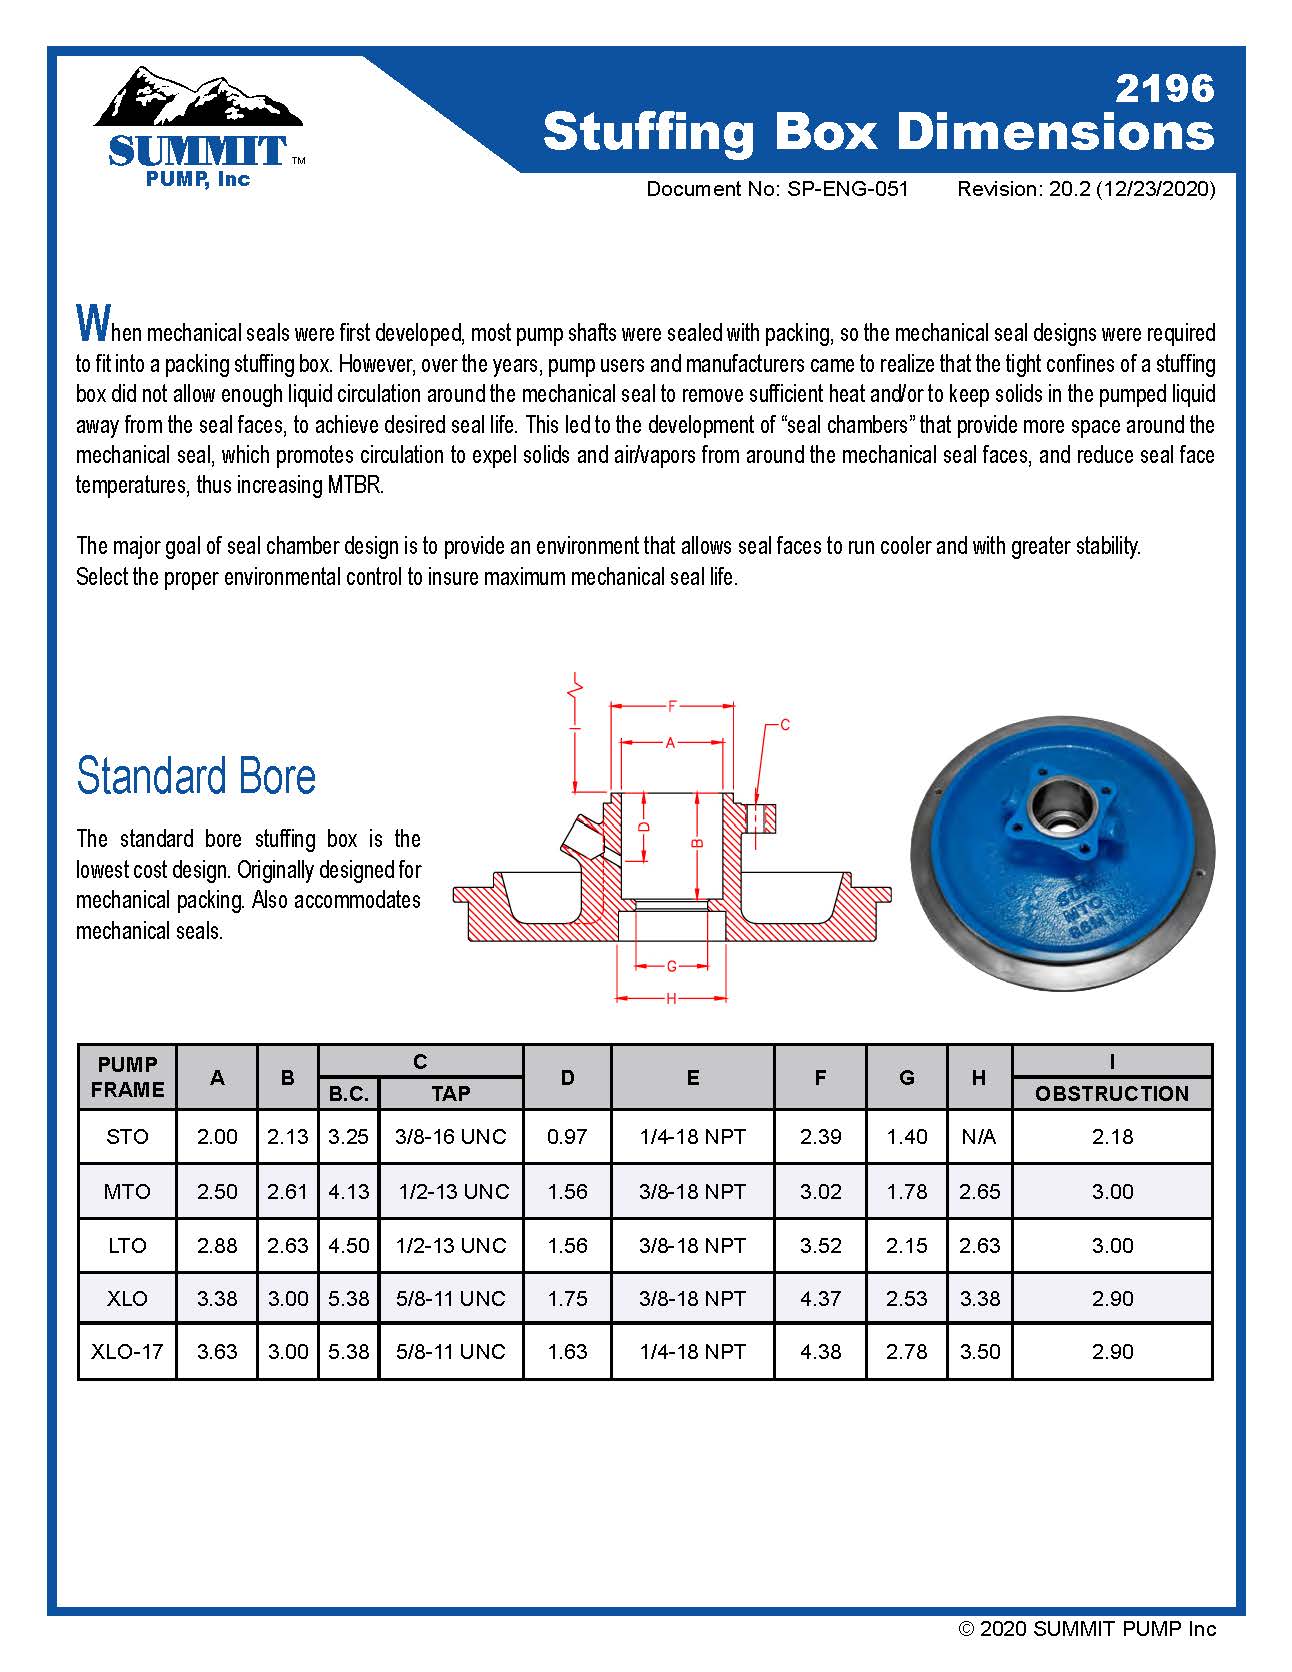 Summit 2196 ANSI Stuffing Box Dimensions Brochure